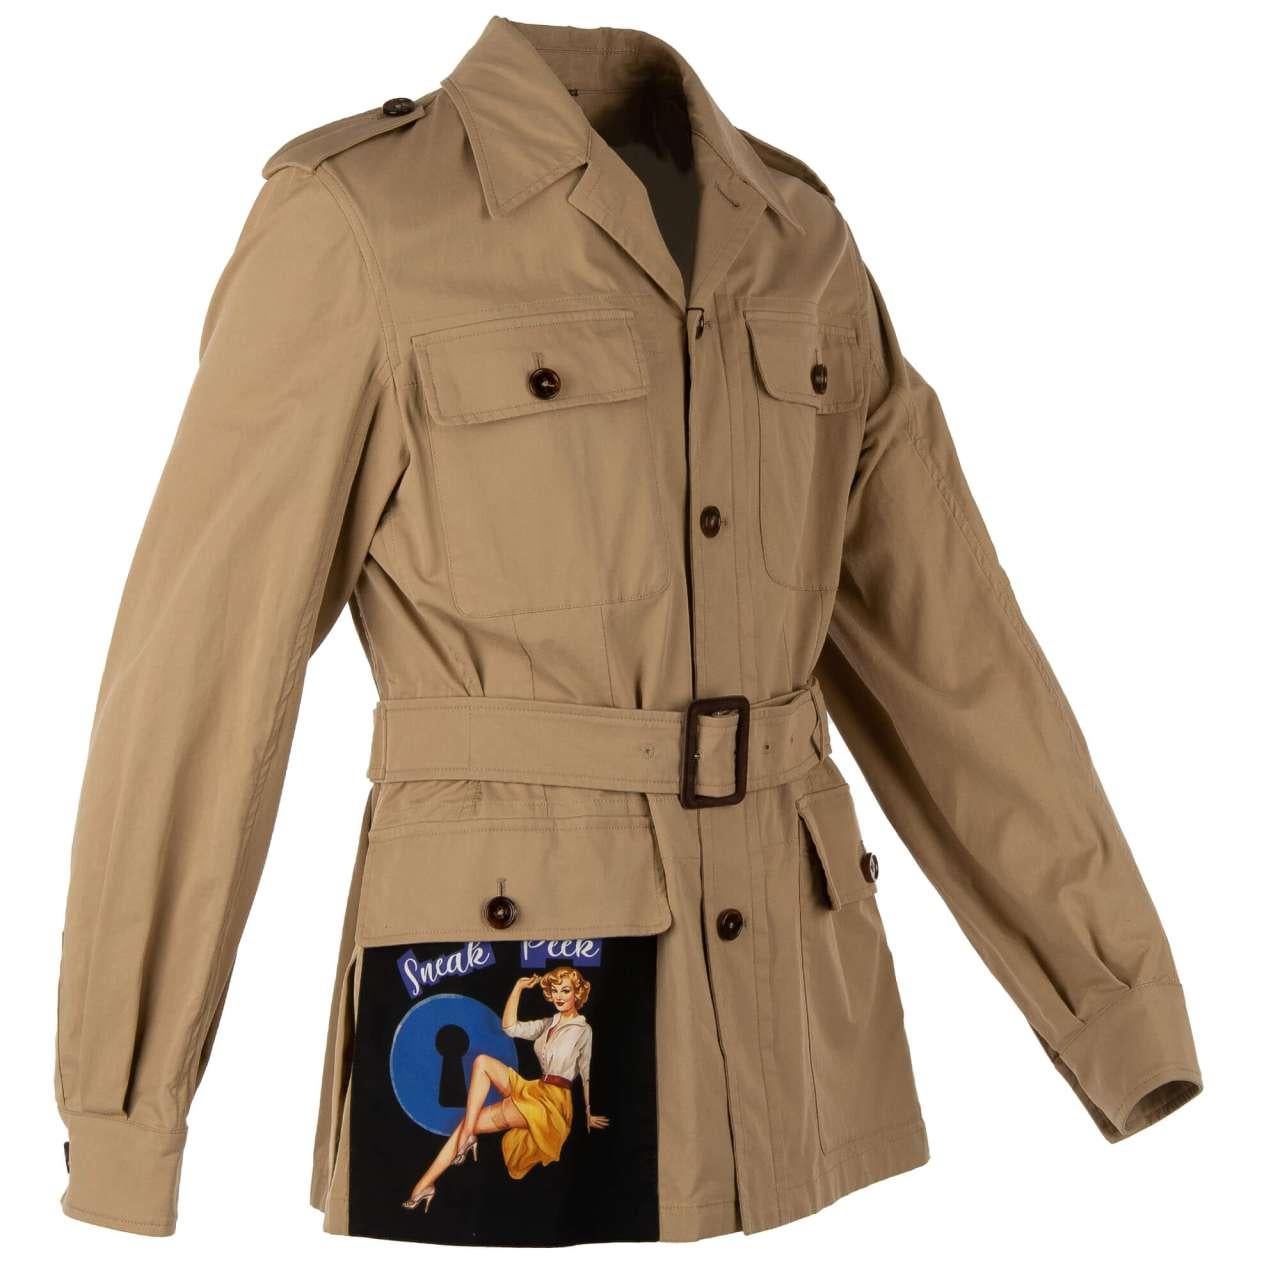 Dolce & Gabbana Canvas Safari Jacket SNEAK PEEK with Belt and Pockets Beige 46 In Excellent Condition For Sale In Erkrath, DE